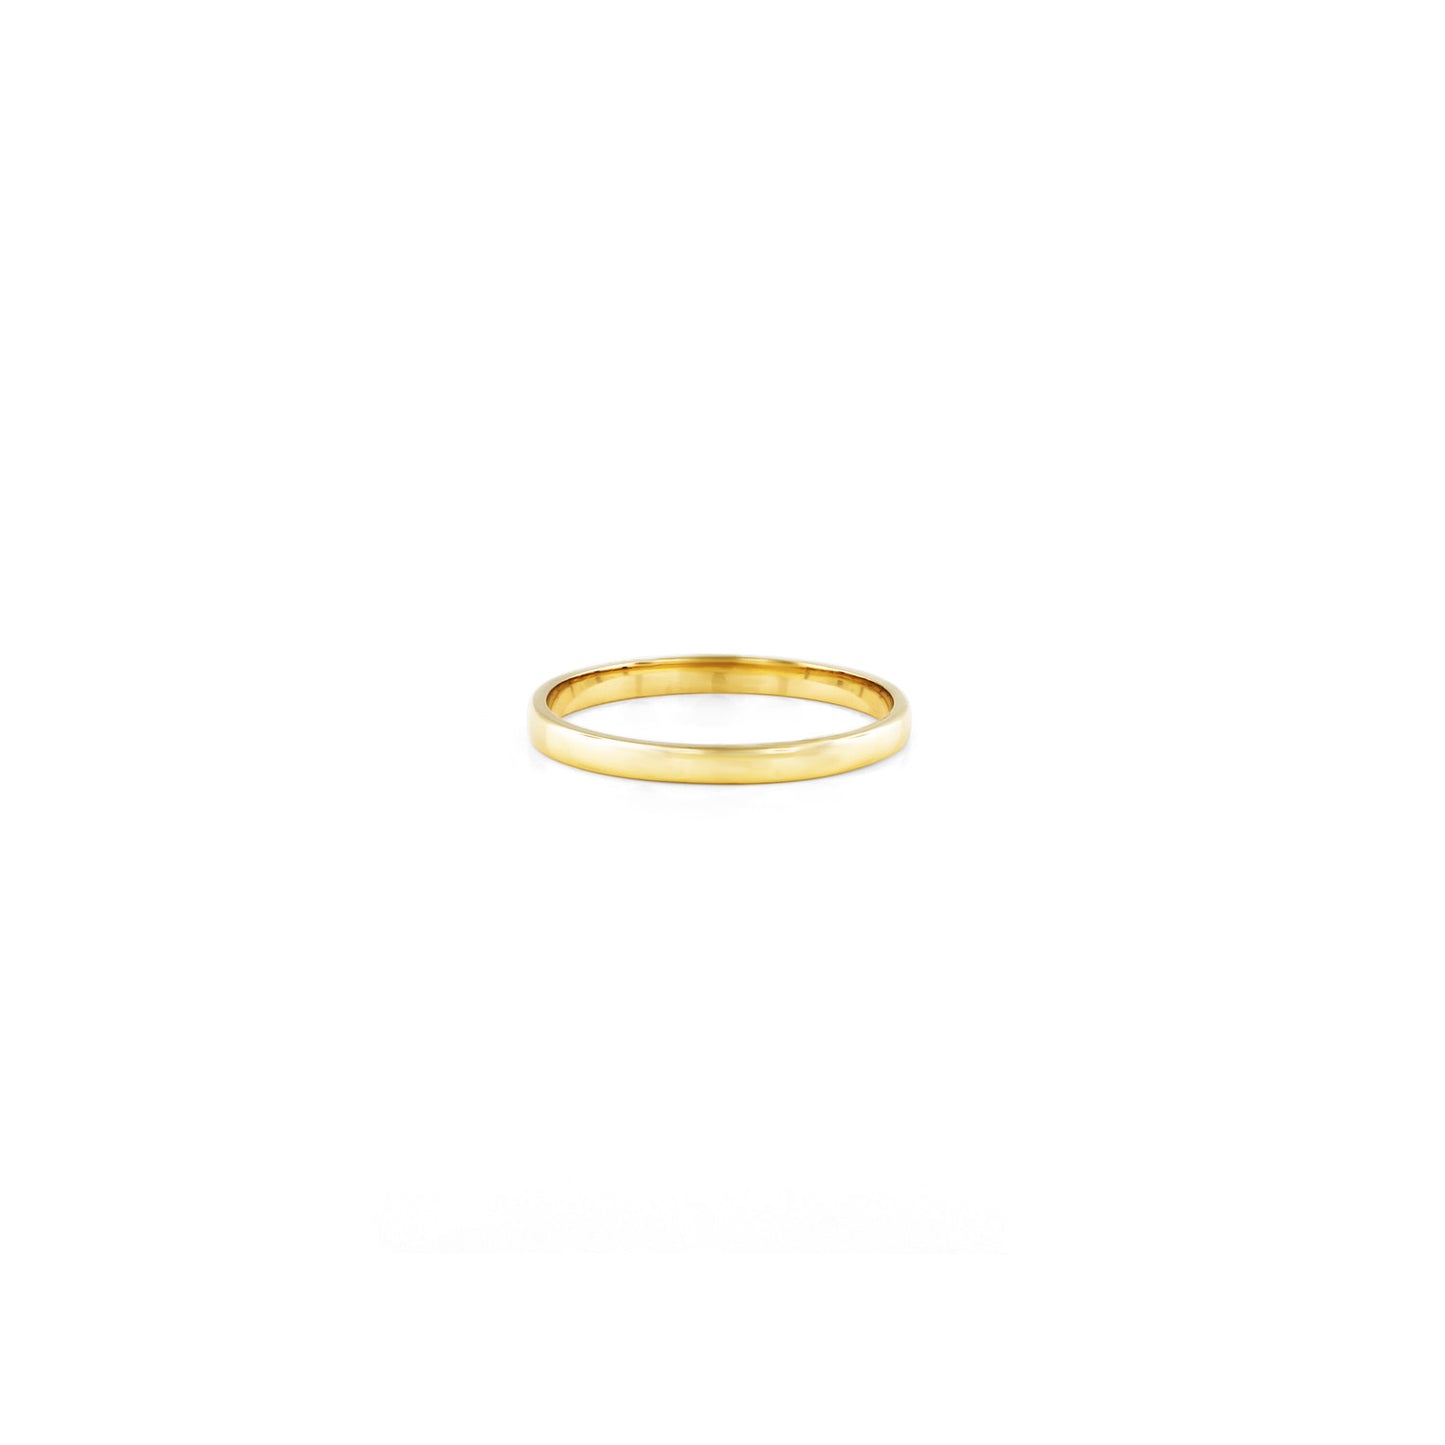 2mm flat thin gold band tiny ring PRR 022 14KY